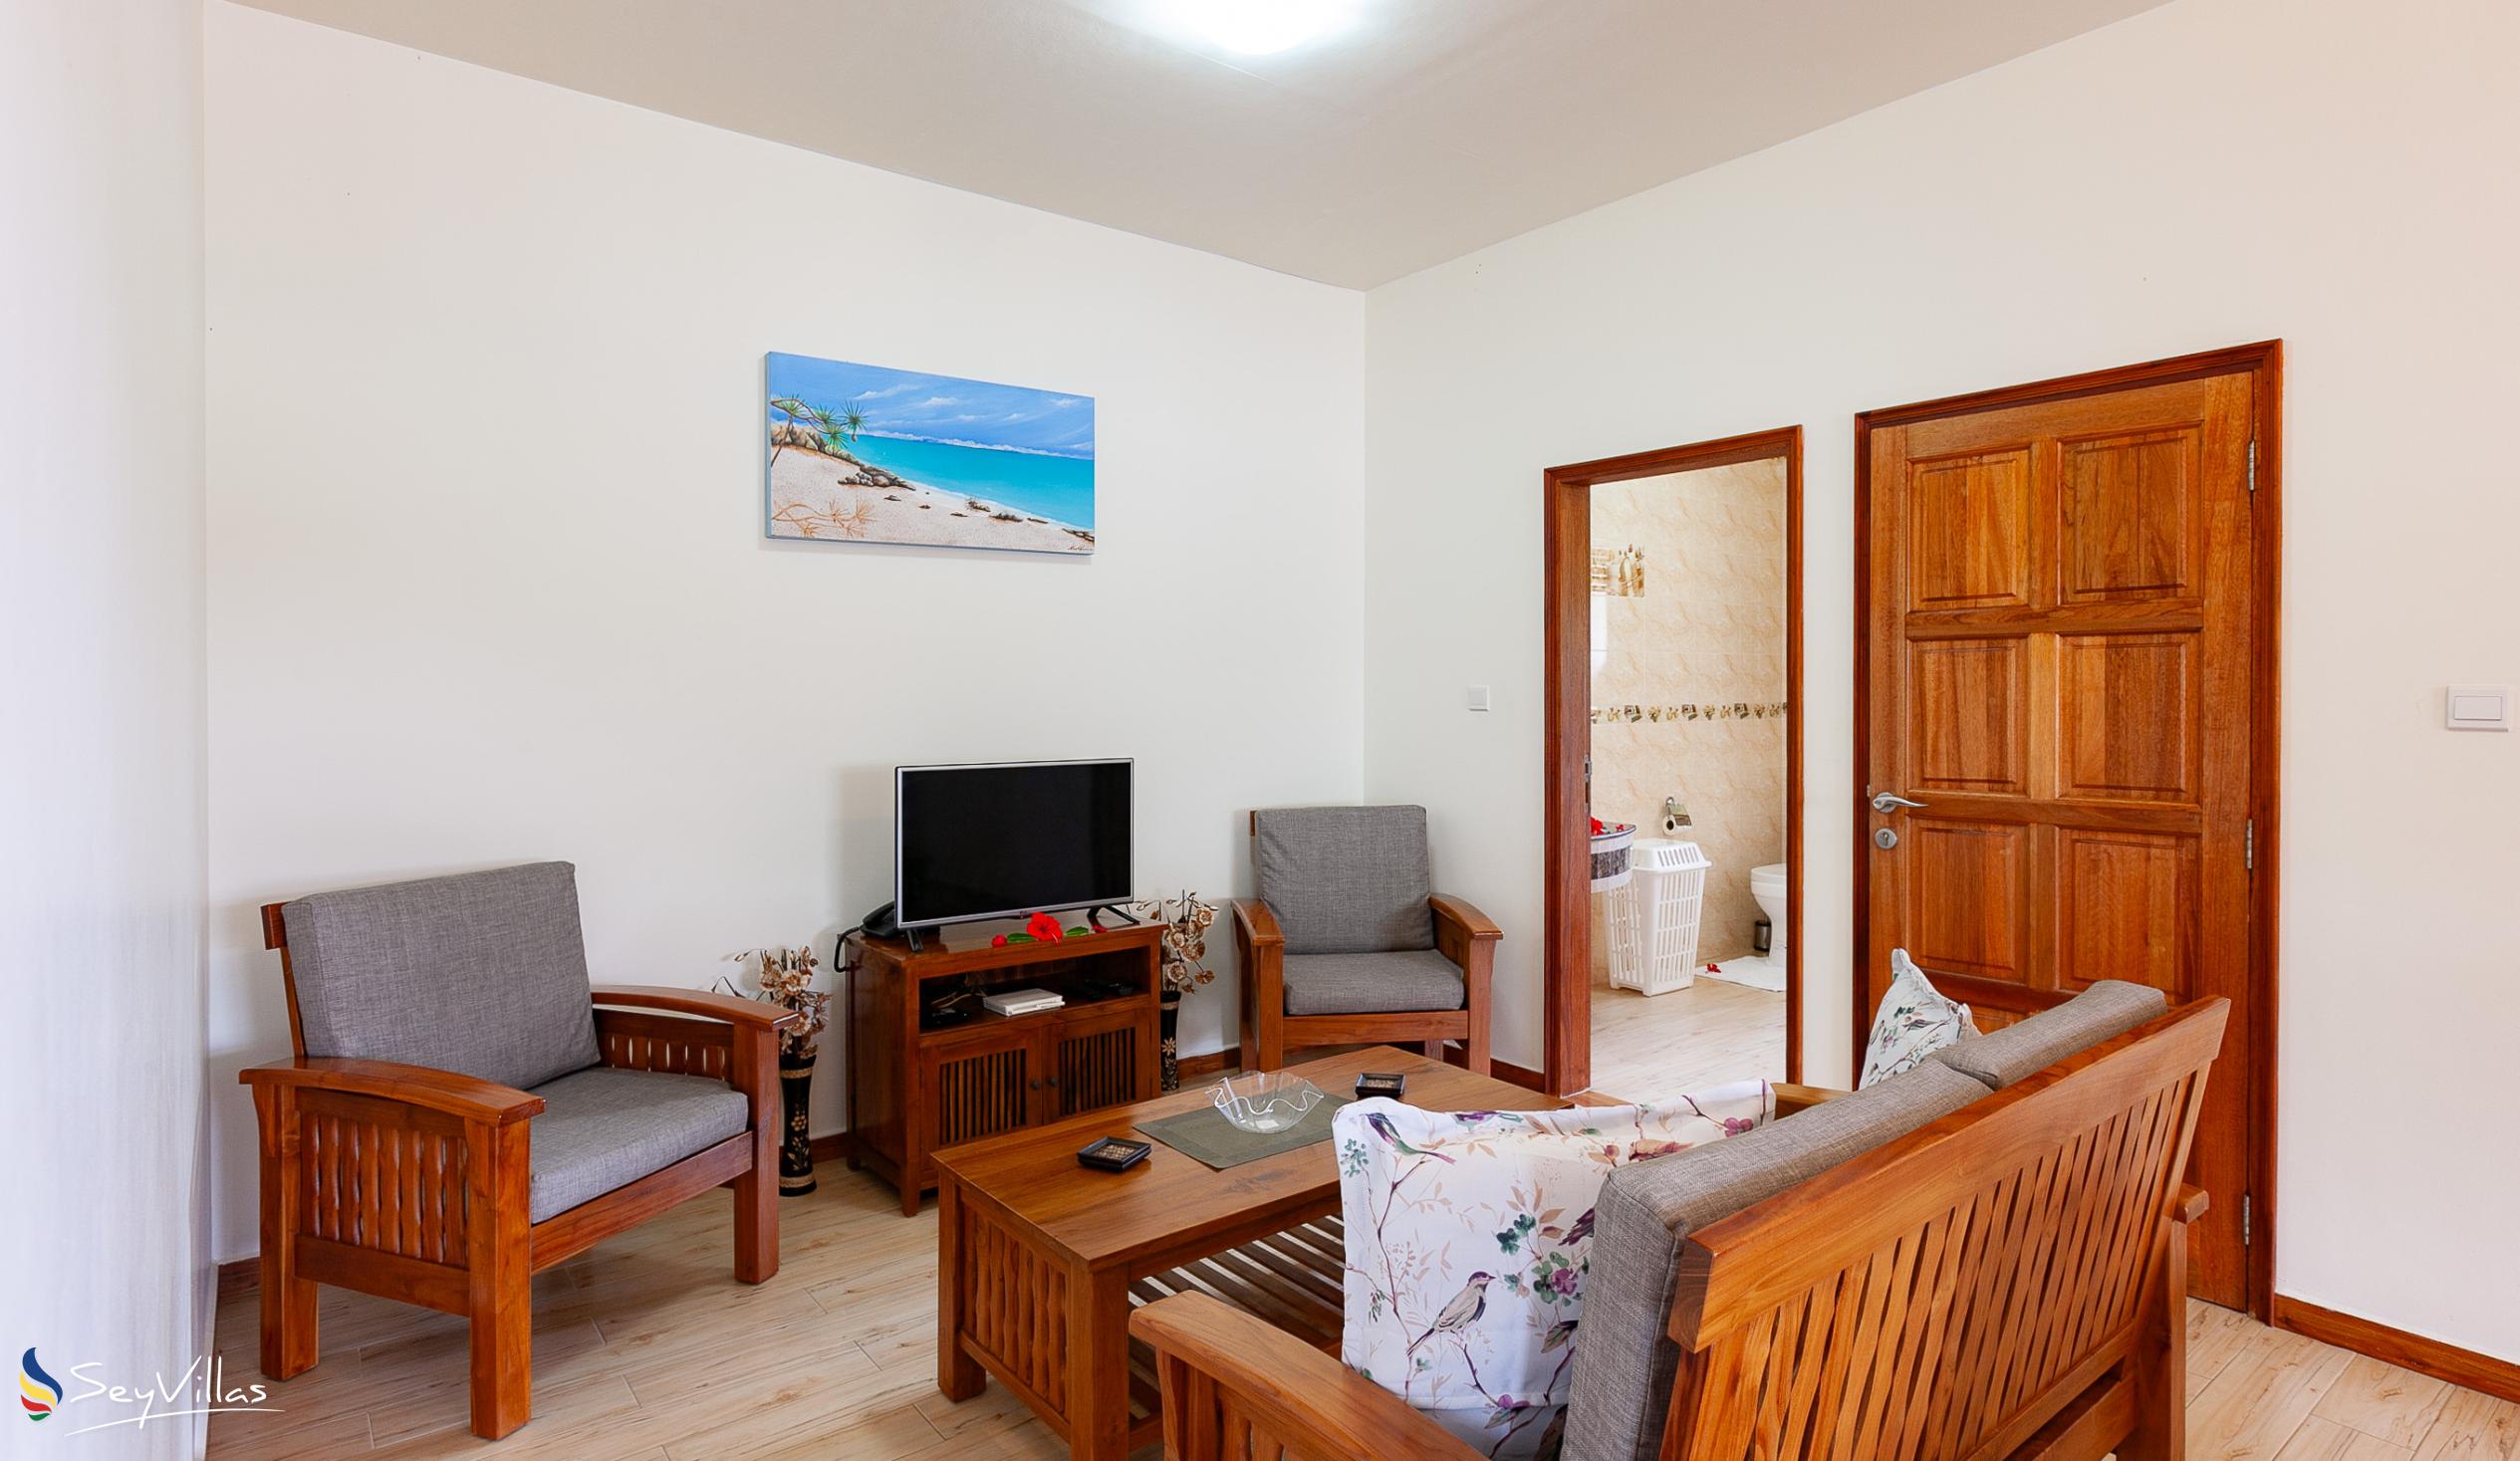 Photo 57: Seashell Beach Villa - 2-Bedroom Apartment - Praslin (Seychelles)